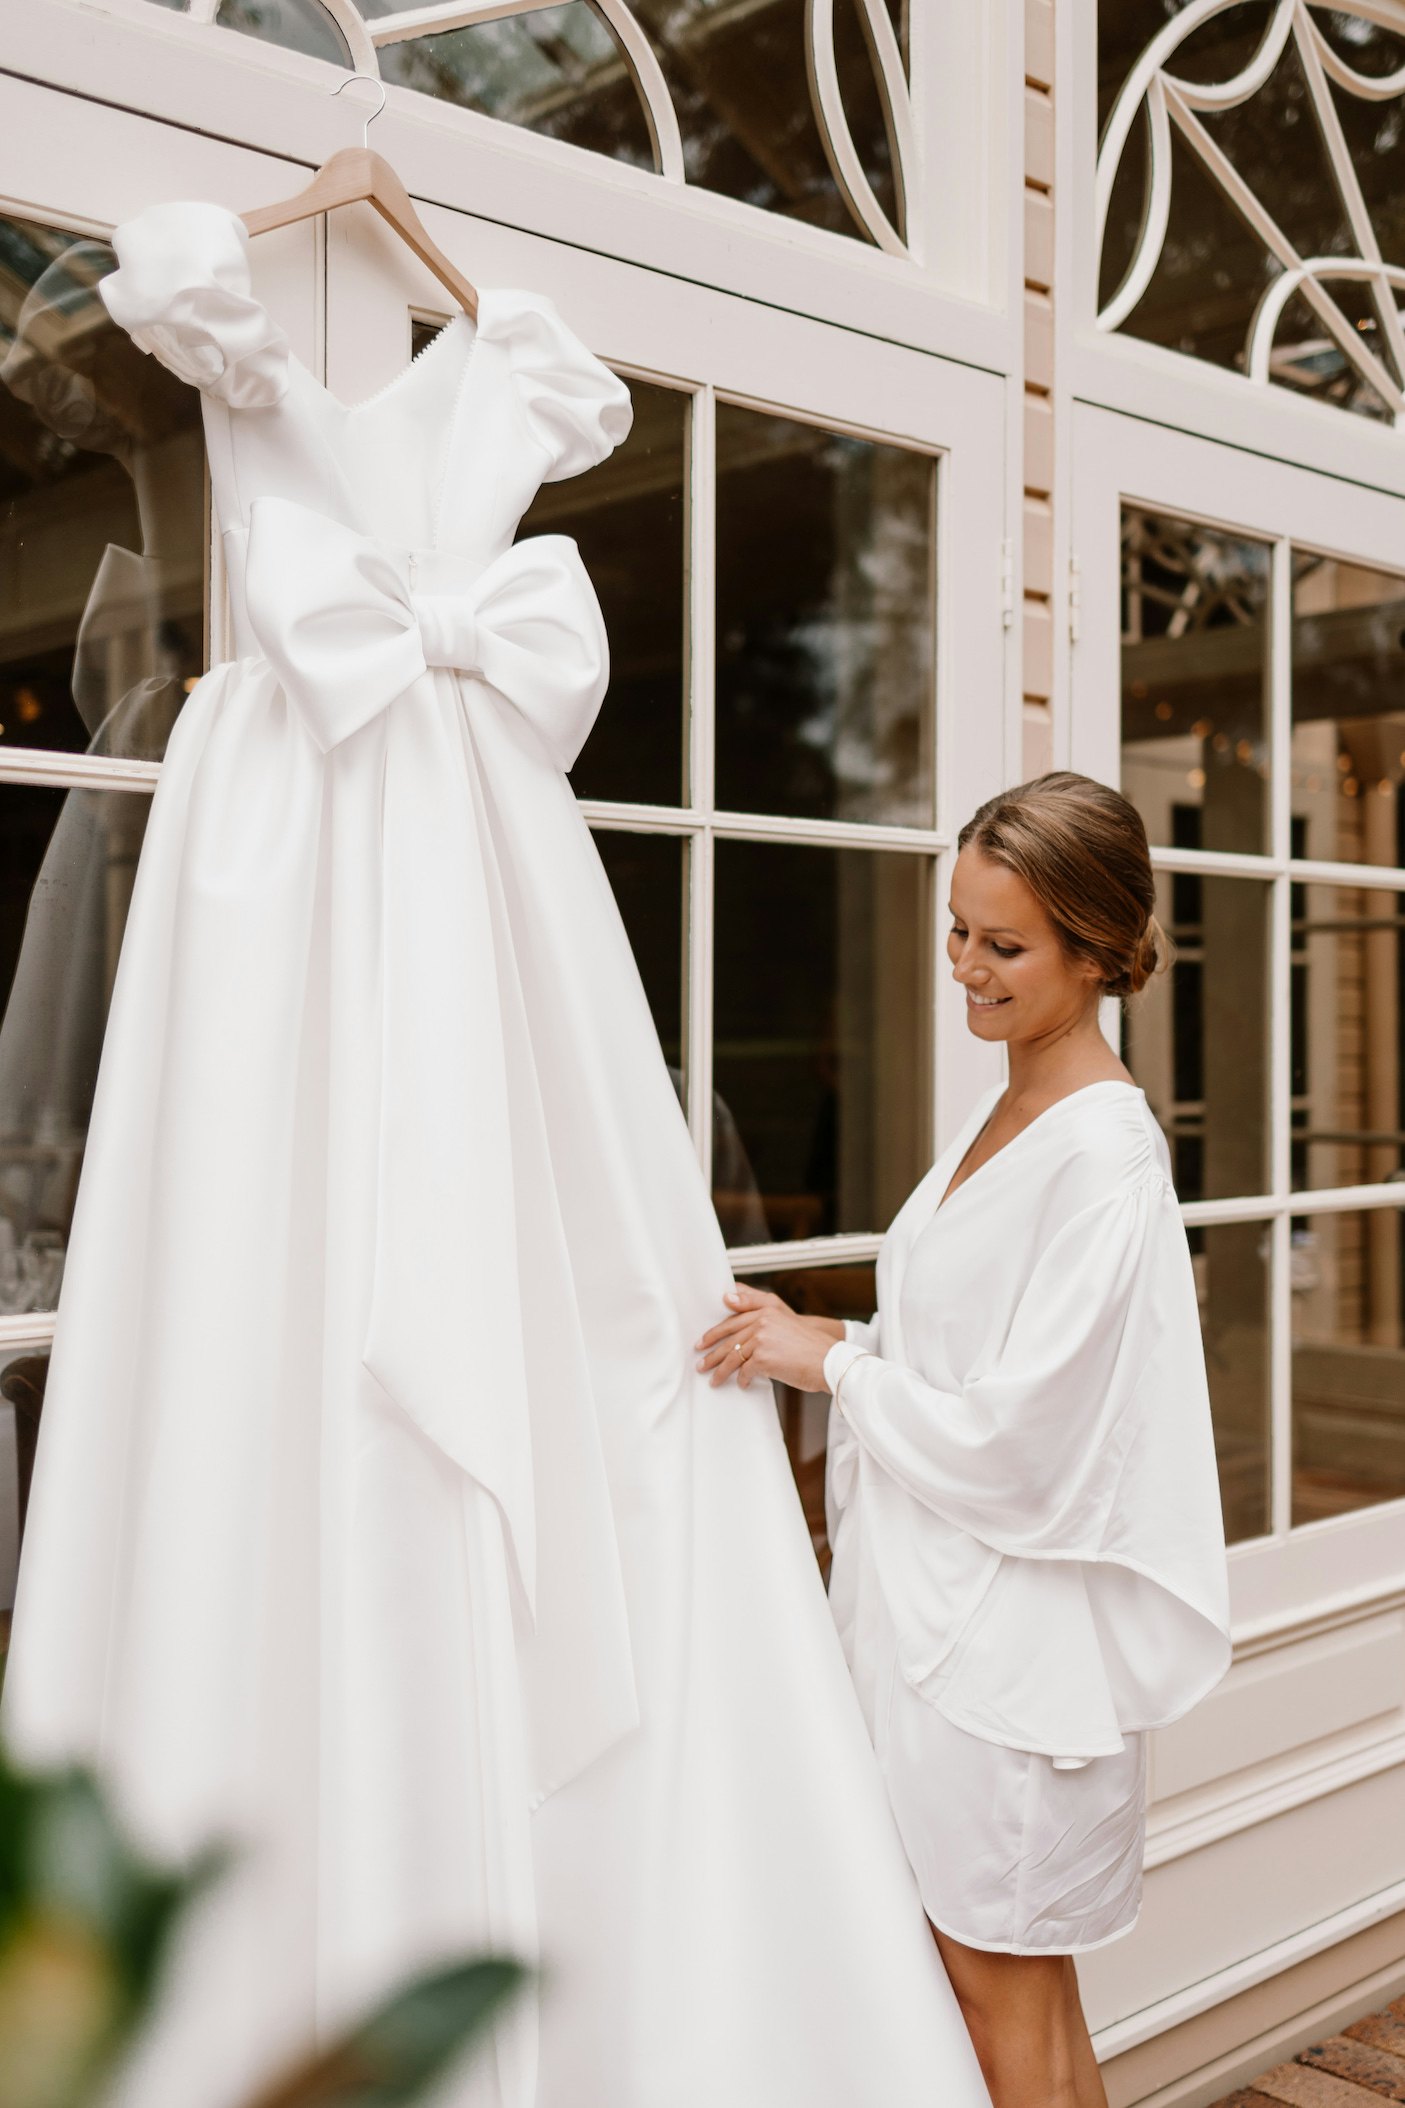 Bride looking at hanging wedding dress